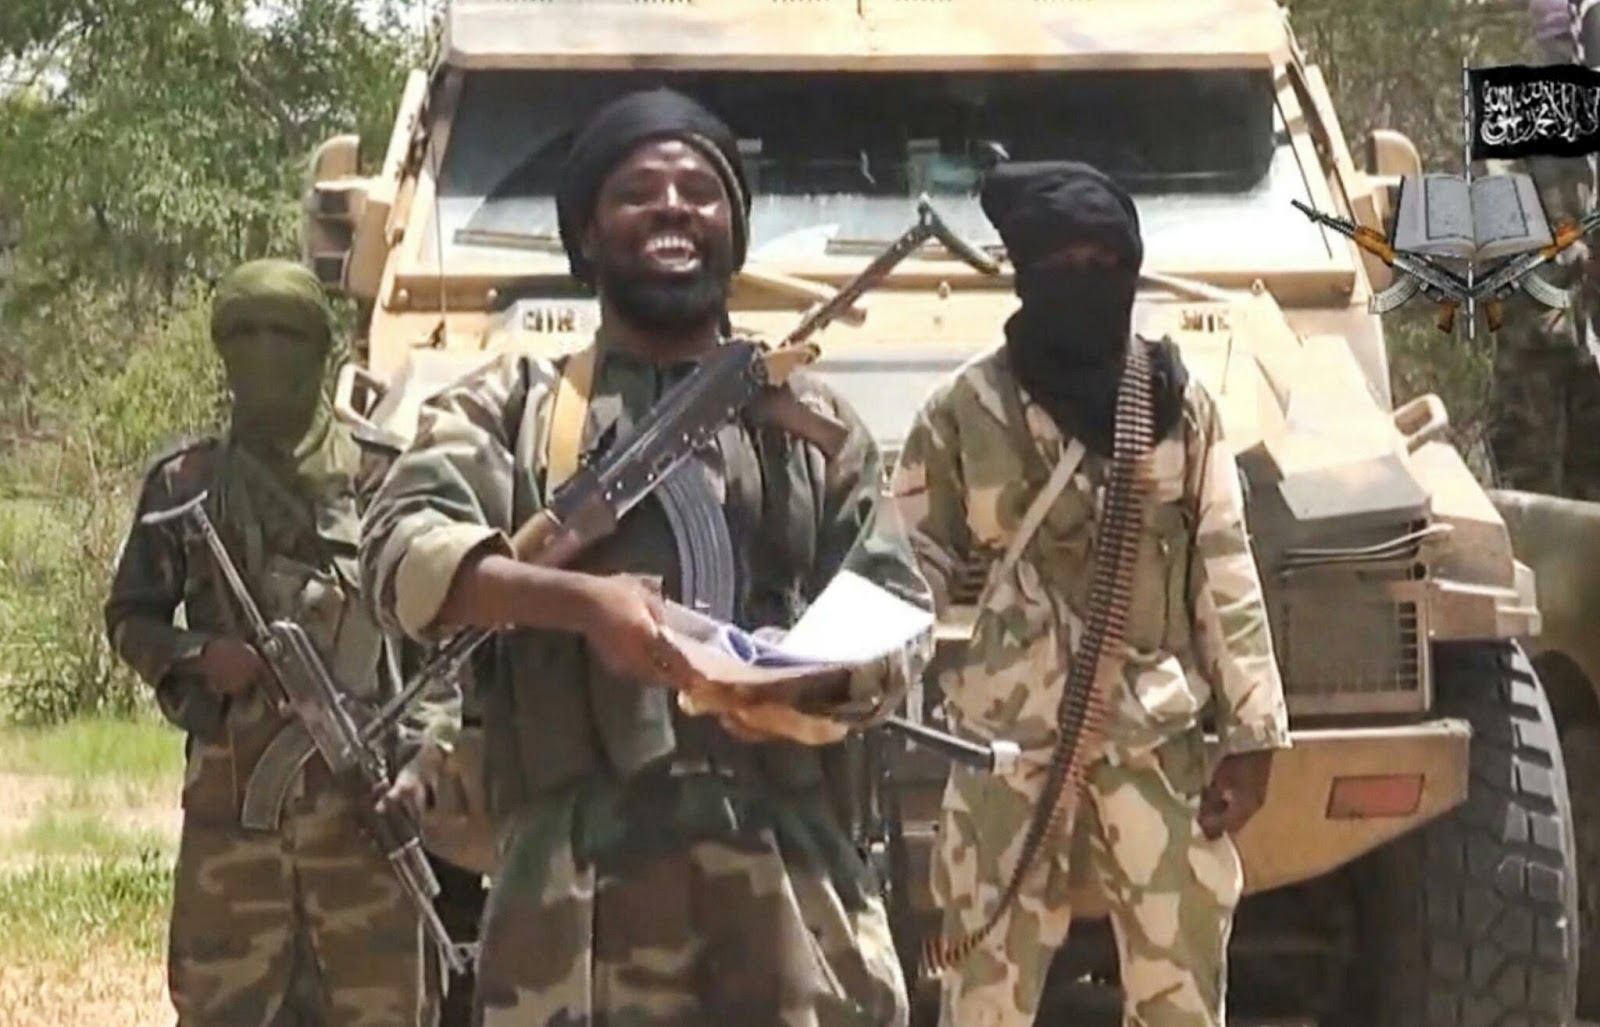 Boko haram don claim responsibility for the Borno state killing